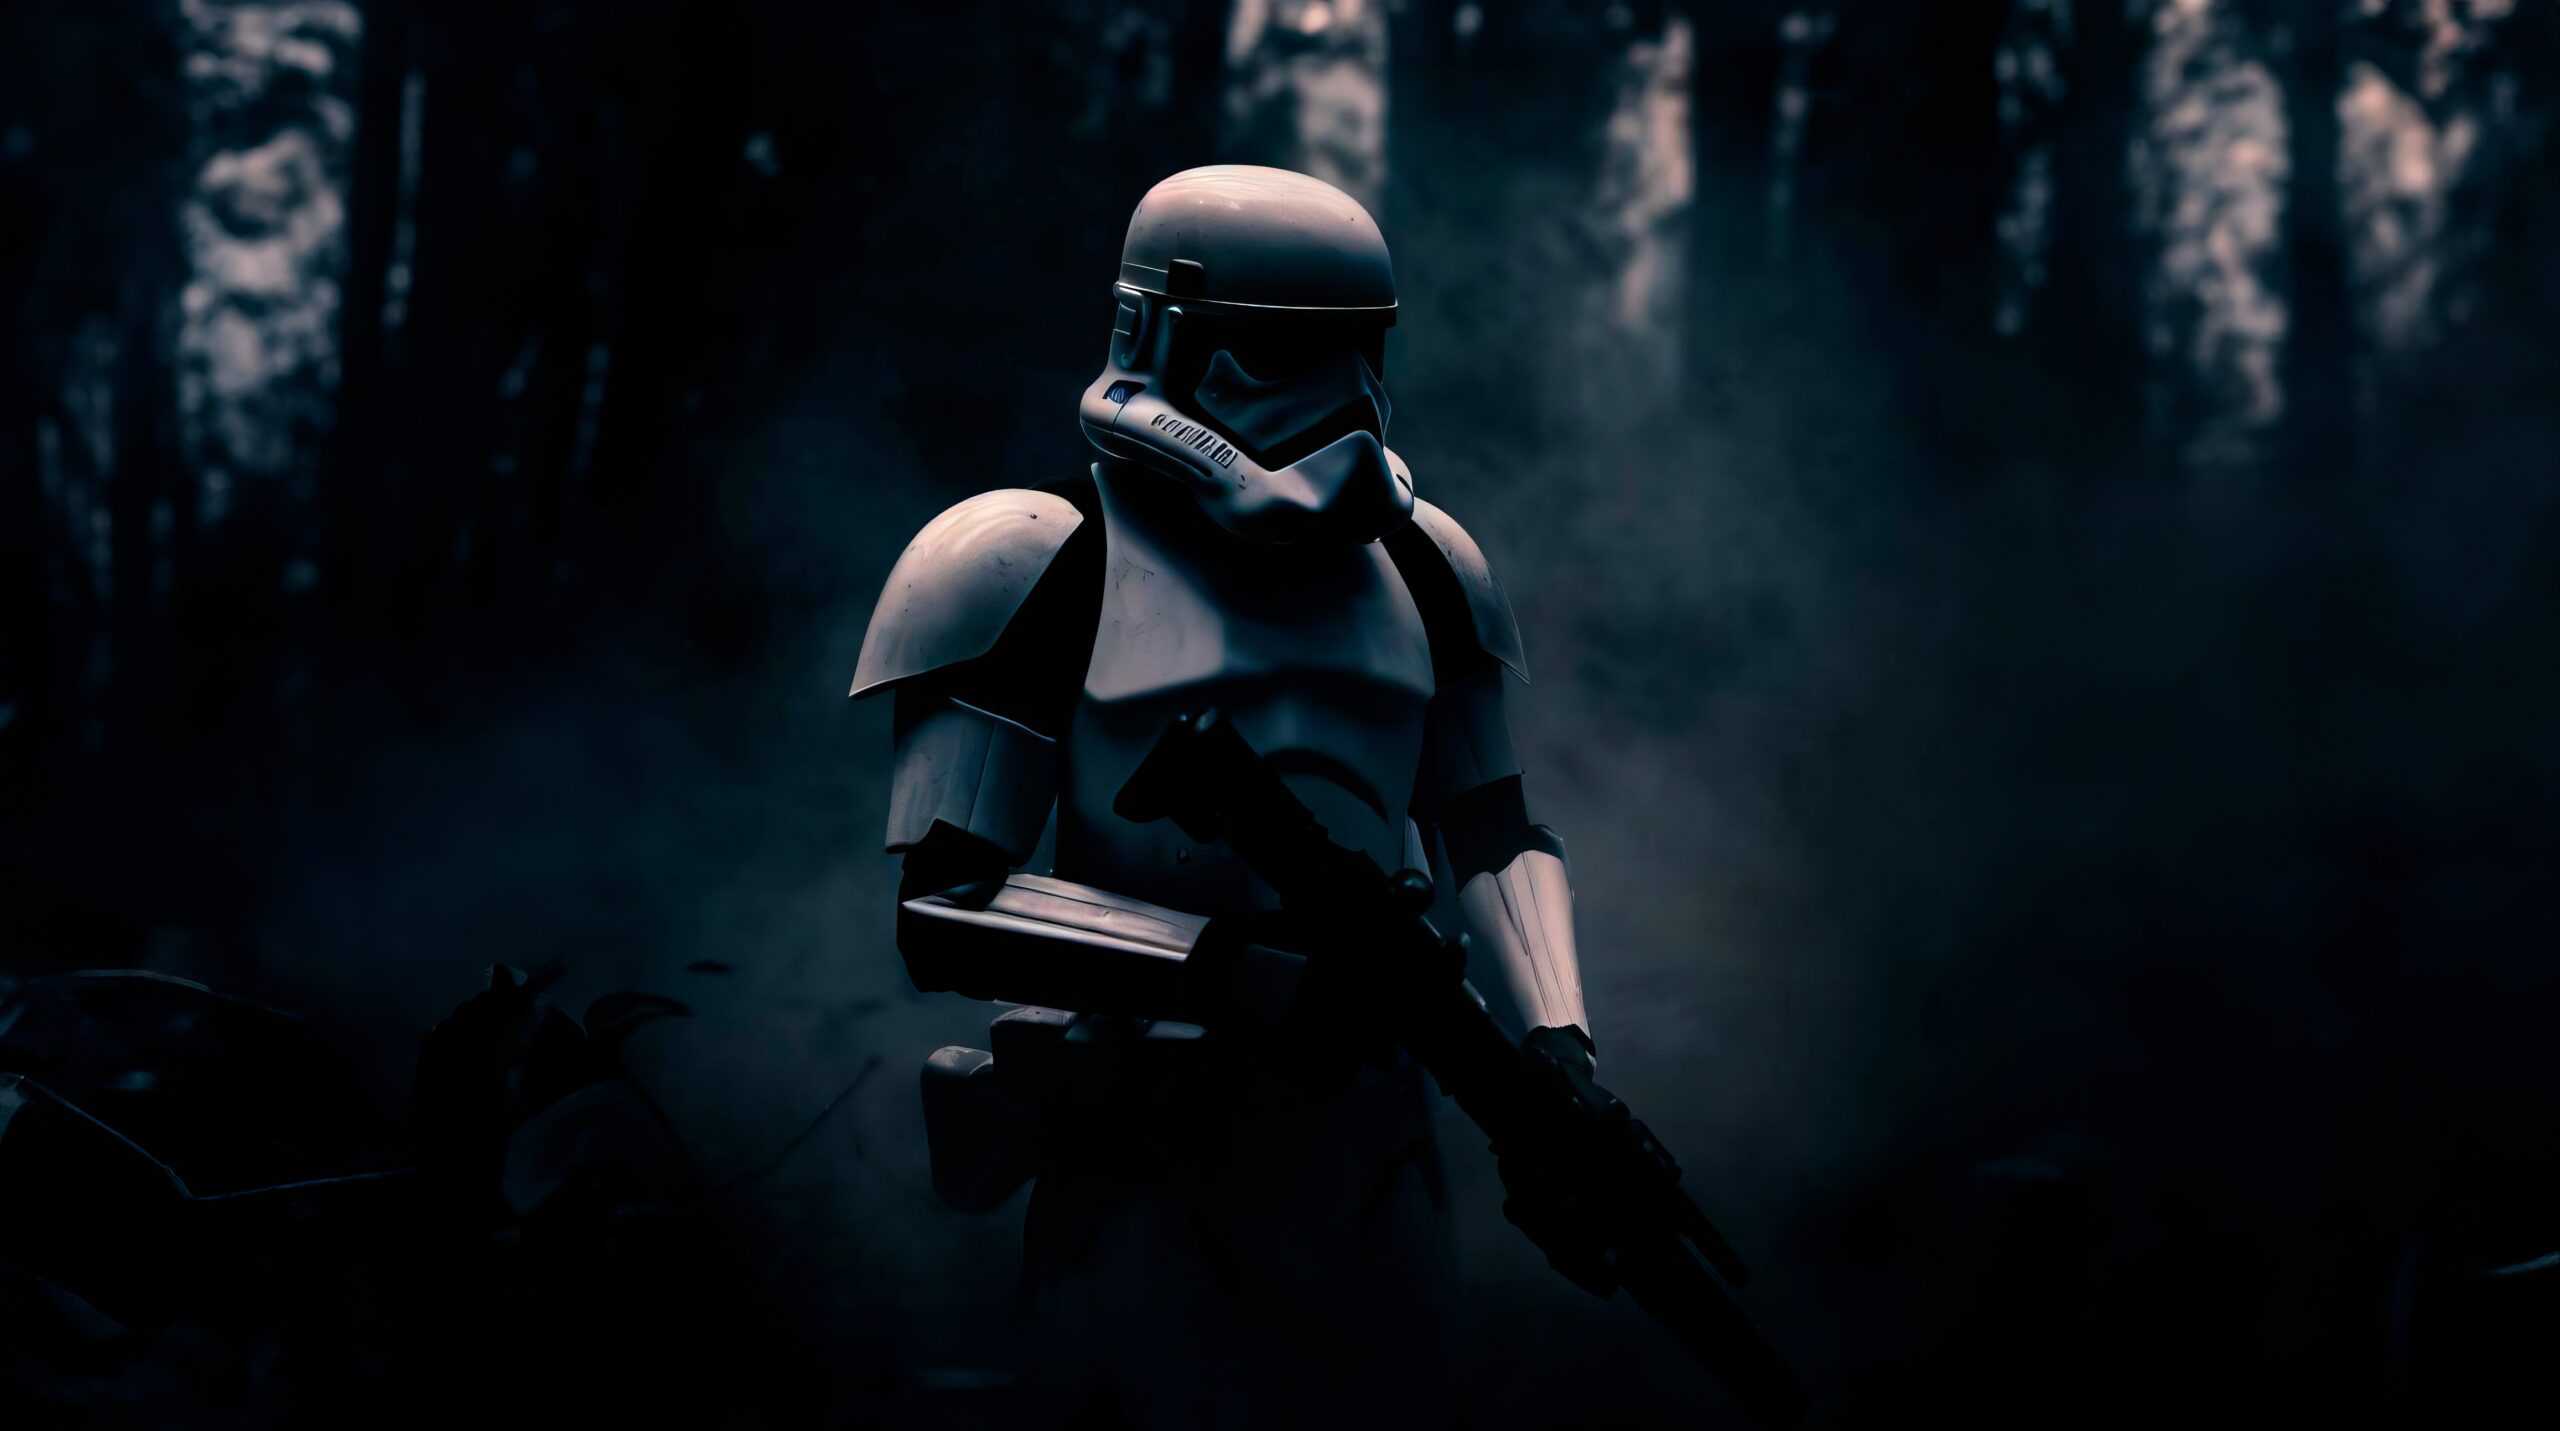 Stormtrooper in the dark forest